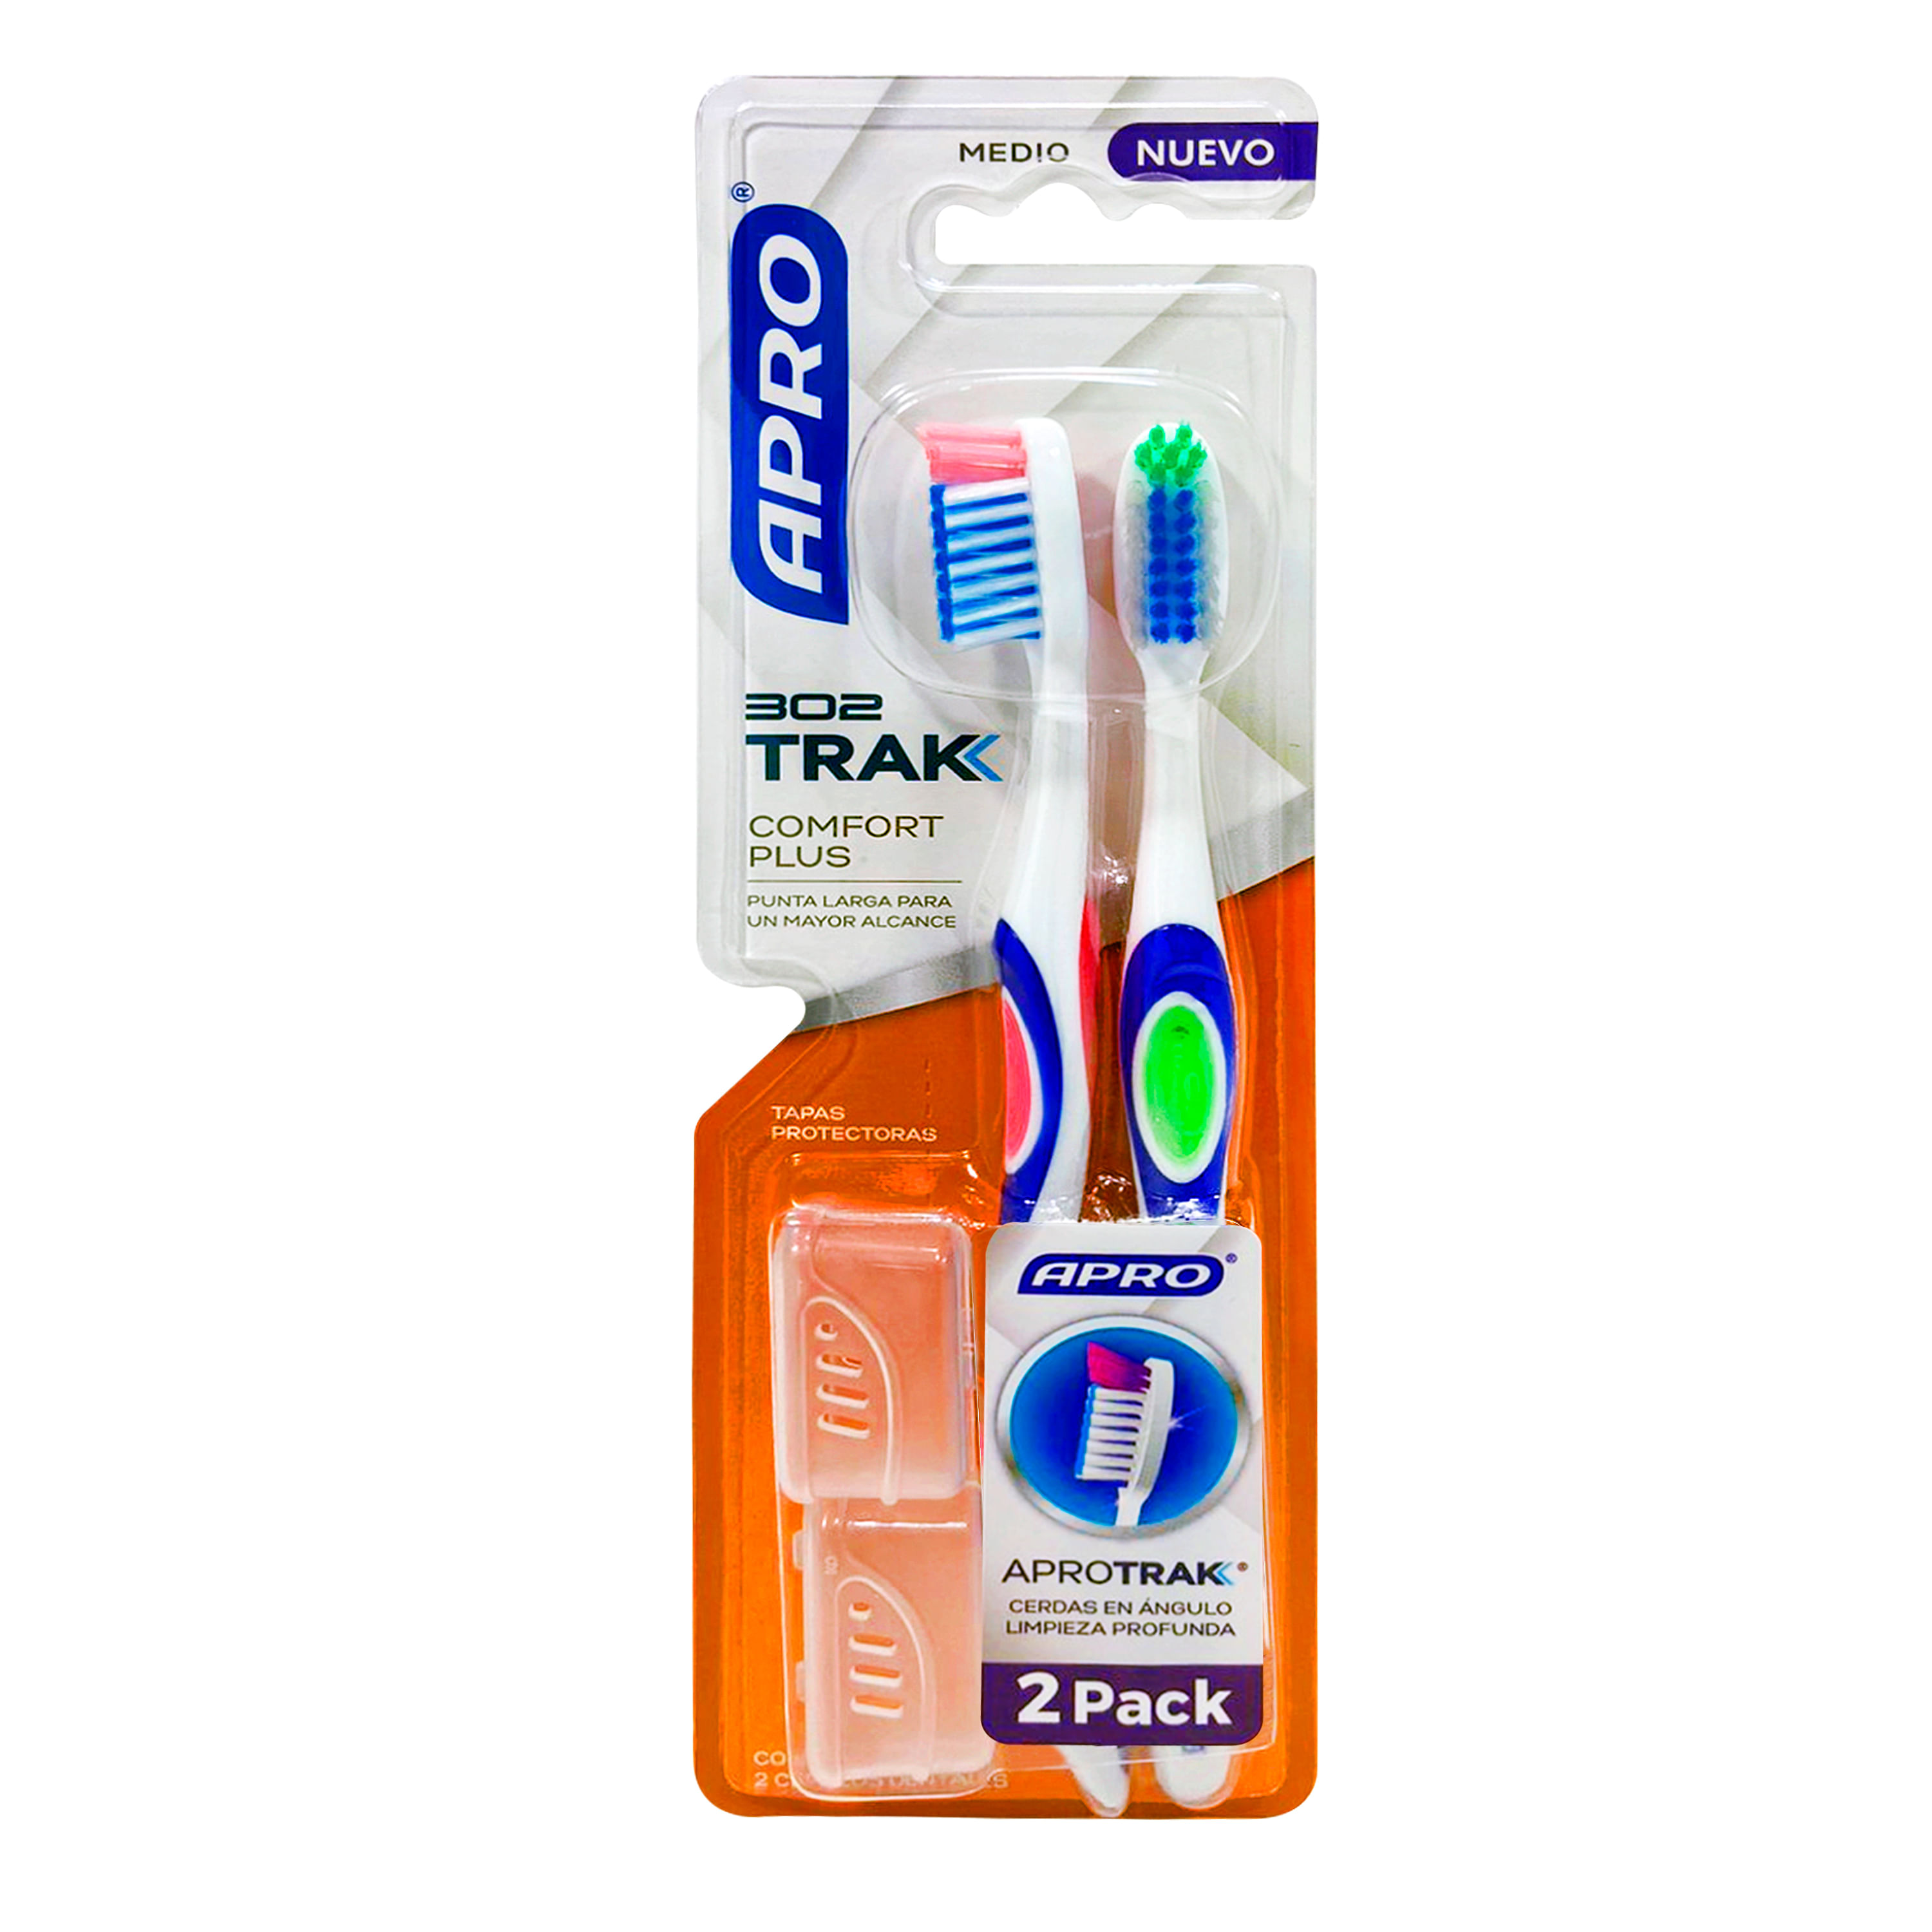 Comprar 2 Pack Cepillo Dental Apro Comfort Plus Medio, Walmart Costa Rica  - Maxi Palí